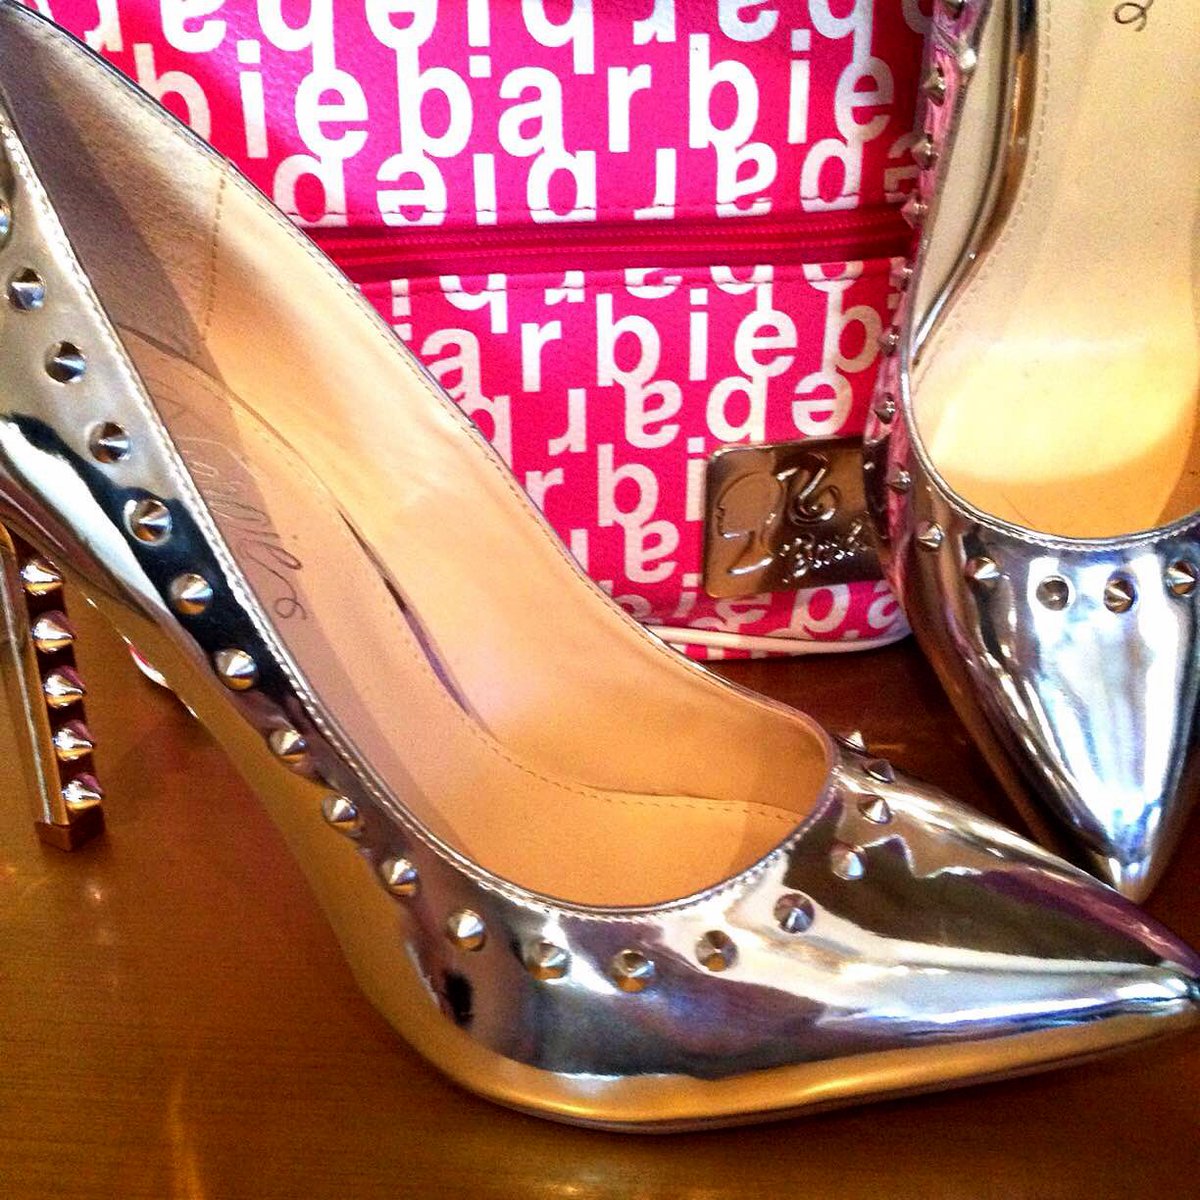 RT @FergieFootwear: Come on @Barbie let’s go party. #fergie #barbie #barbieshoes #barbiebirthdaybash #partyshoes https://t.co/qAvchwnAEm ht…